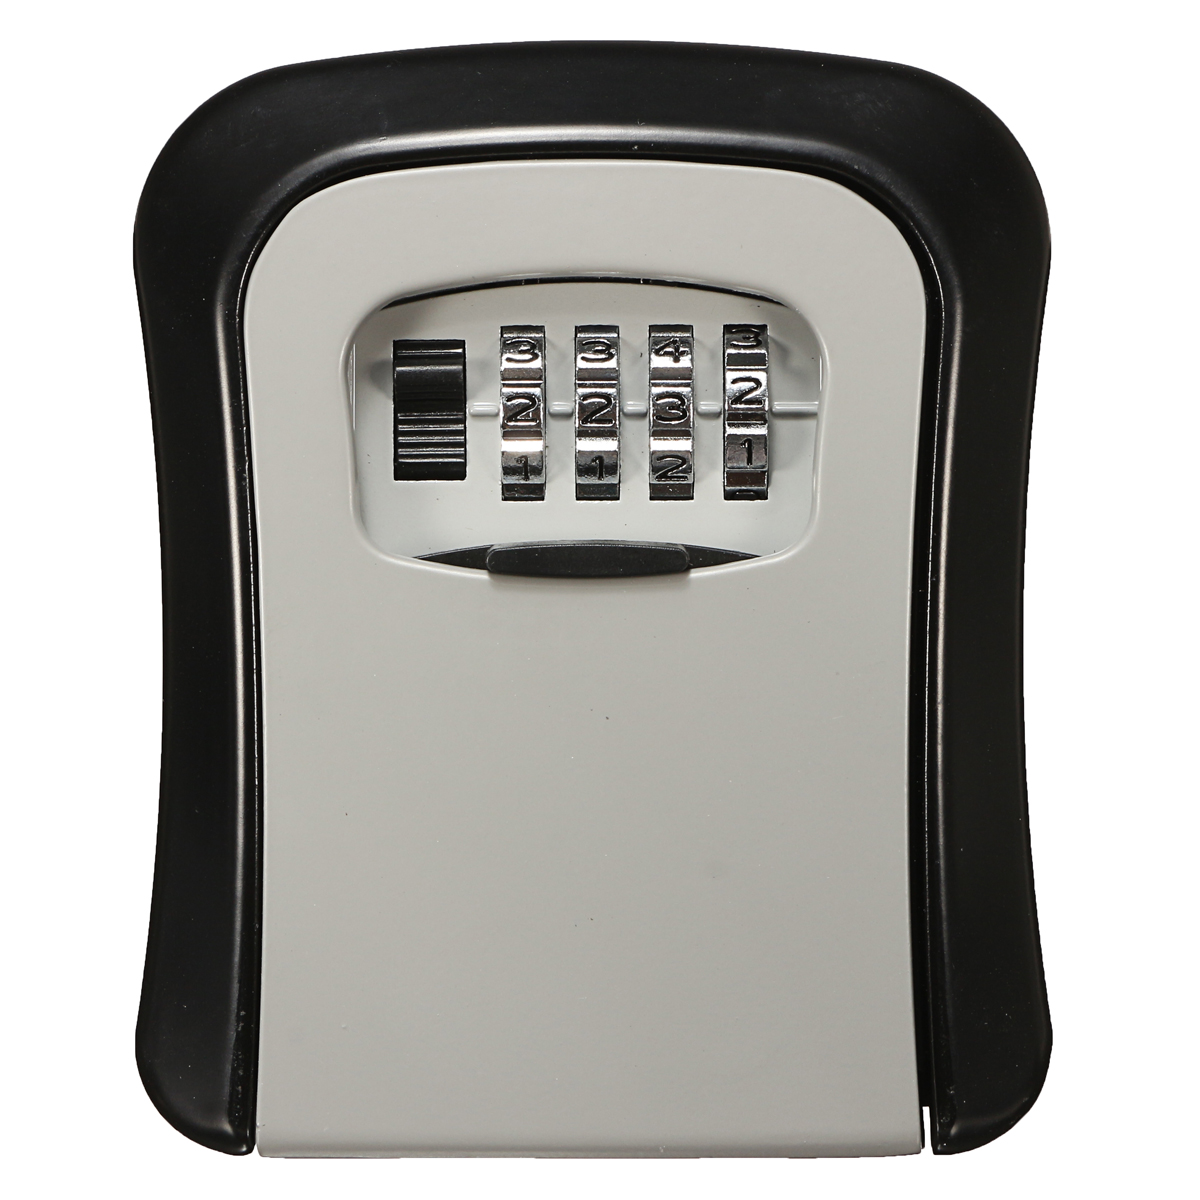 

Wall Mount Key Lock Storage Box Security Keyed Door Lock with 4 Digit Combination Password